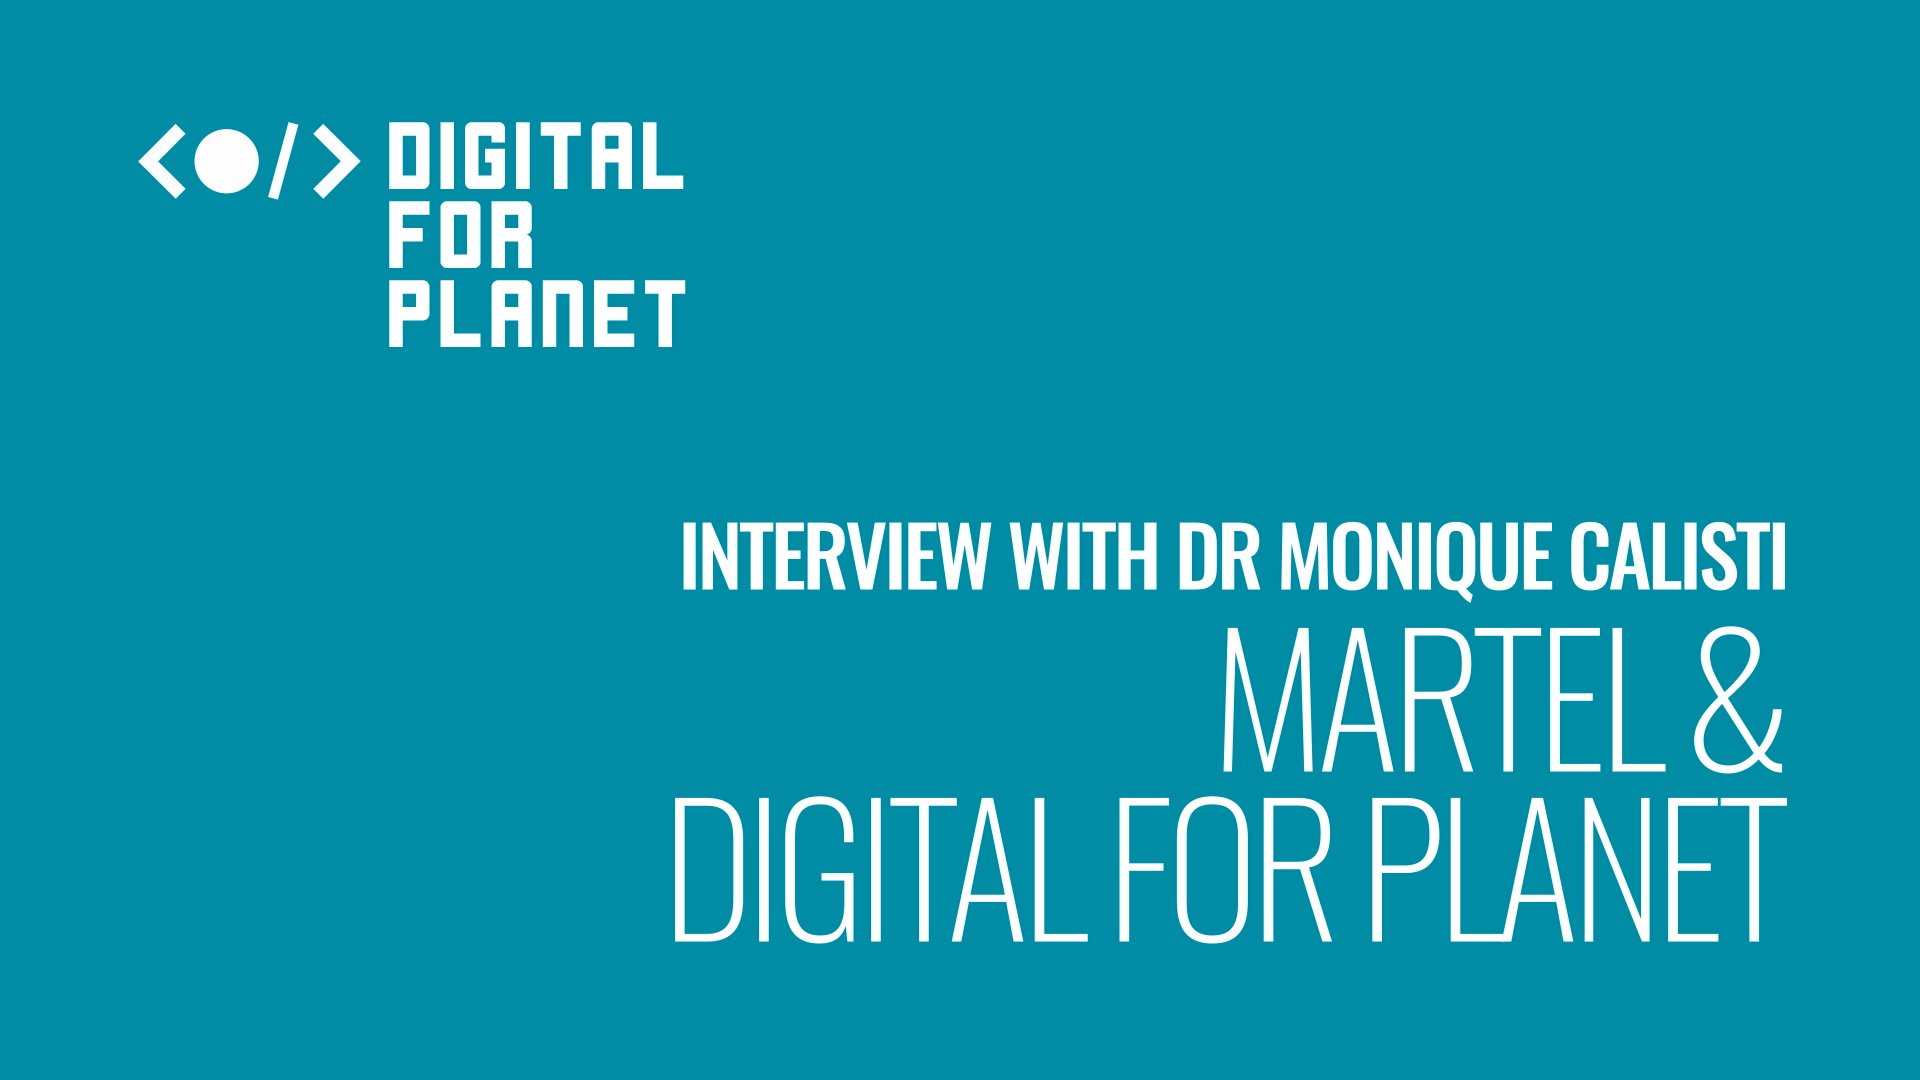 Dr Monique Calisti speaking about Martel and Digital 4 Planet